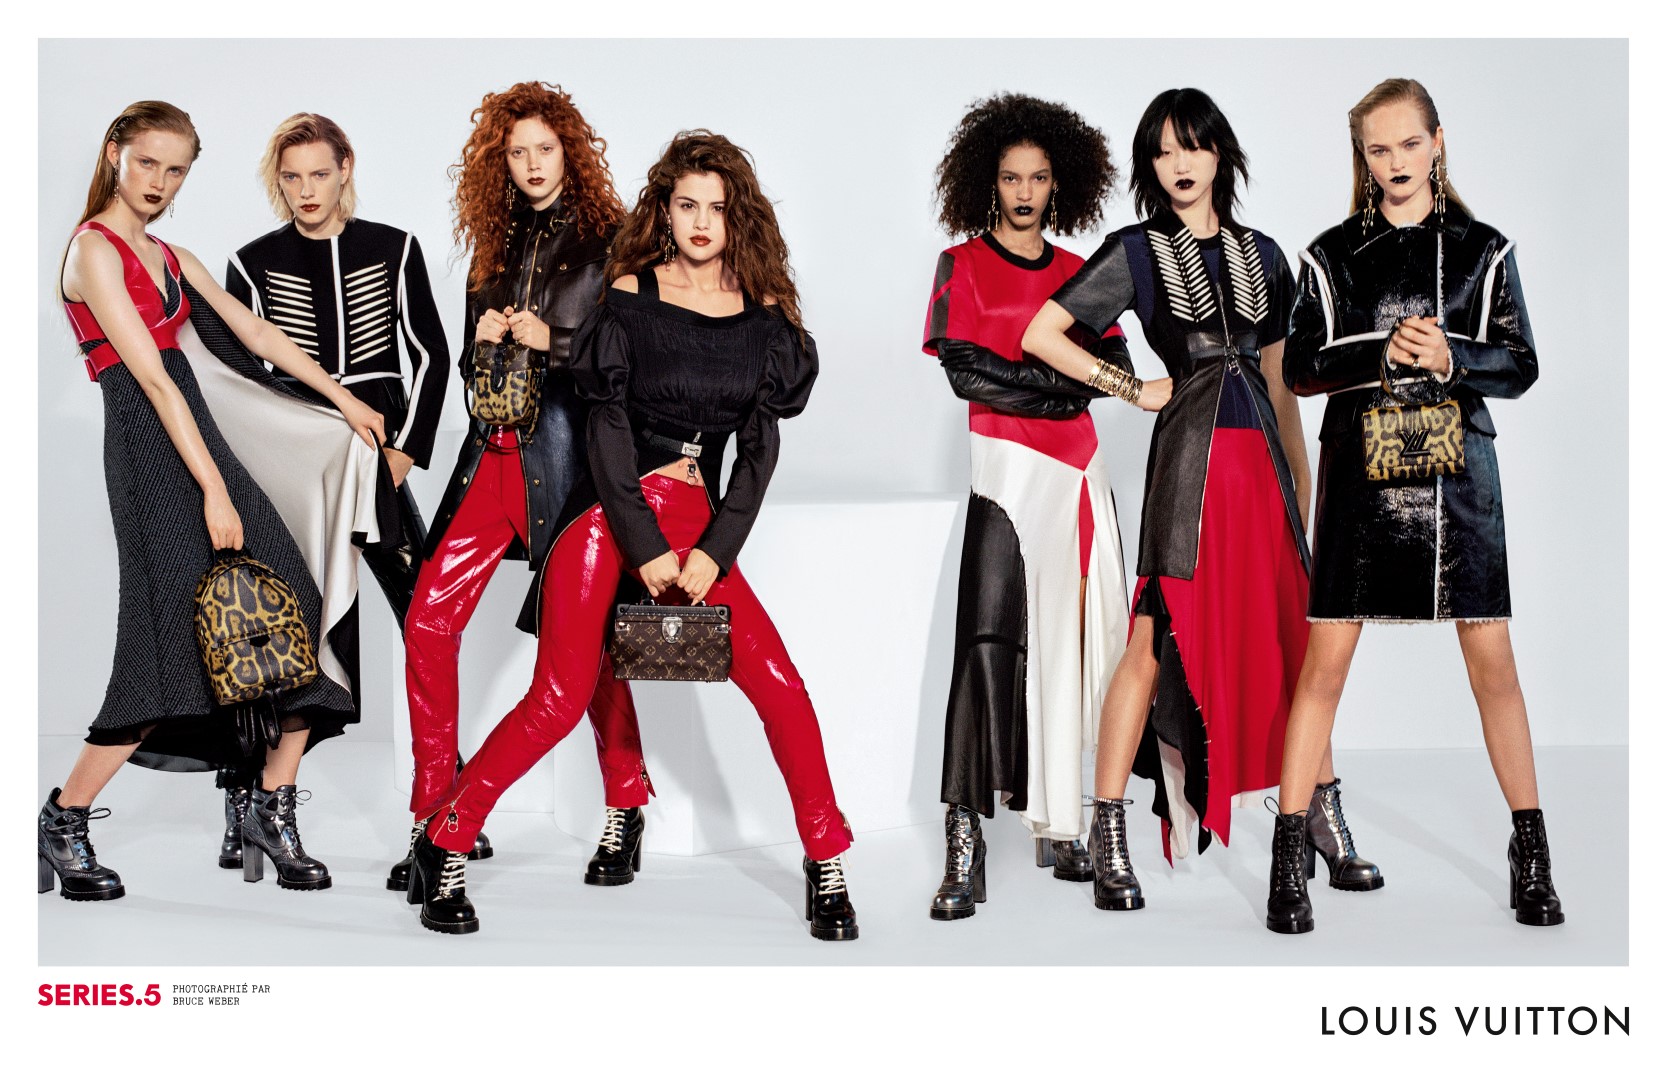 Louis Vuitton Series 5 campagna pubblicitaria autunno inverno 2016 2017: testimonial Selena Gomez